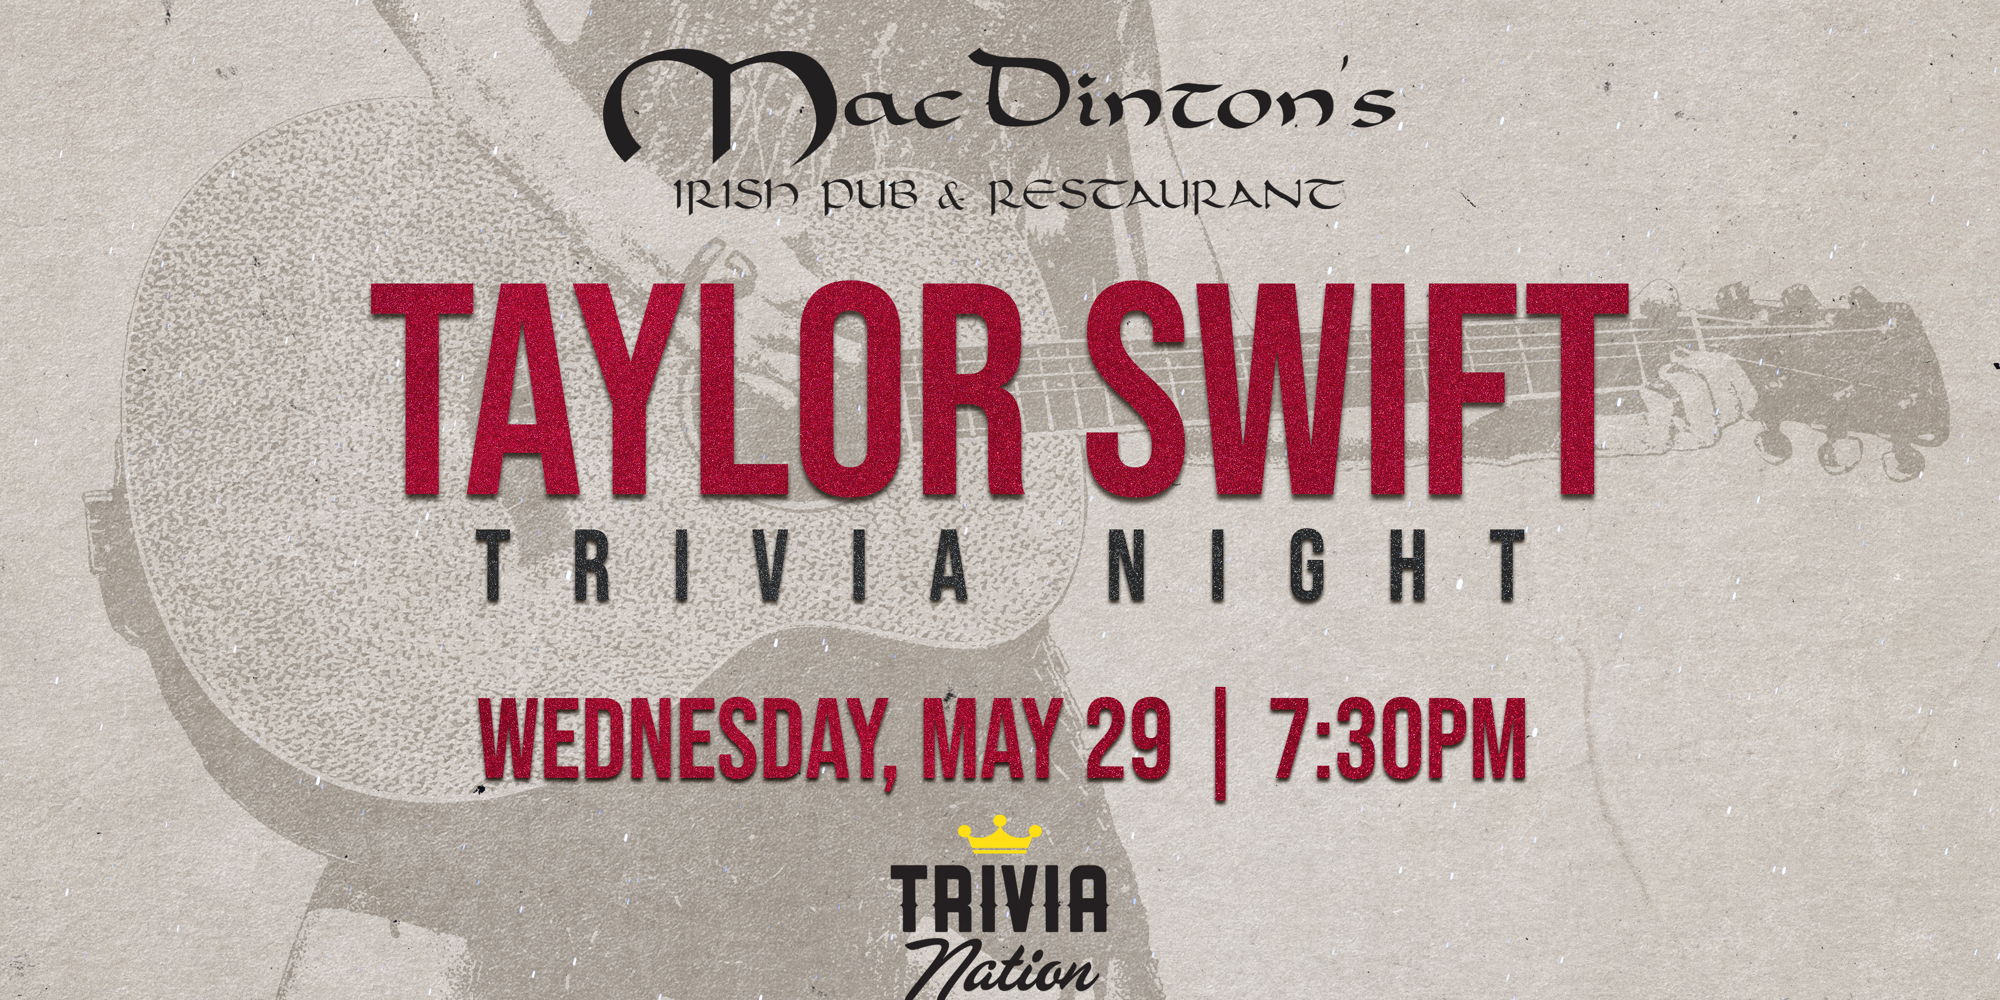 Taylor Swift Trivia Night promotional image